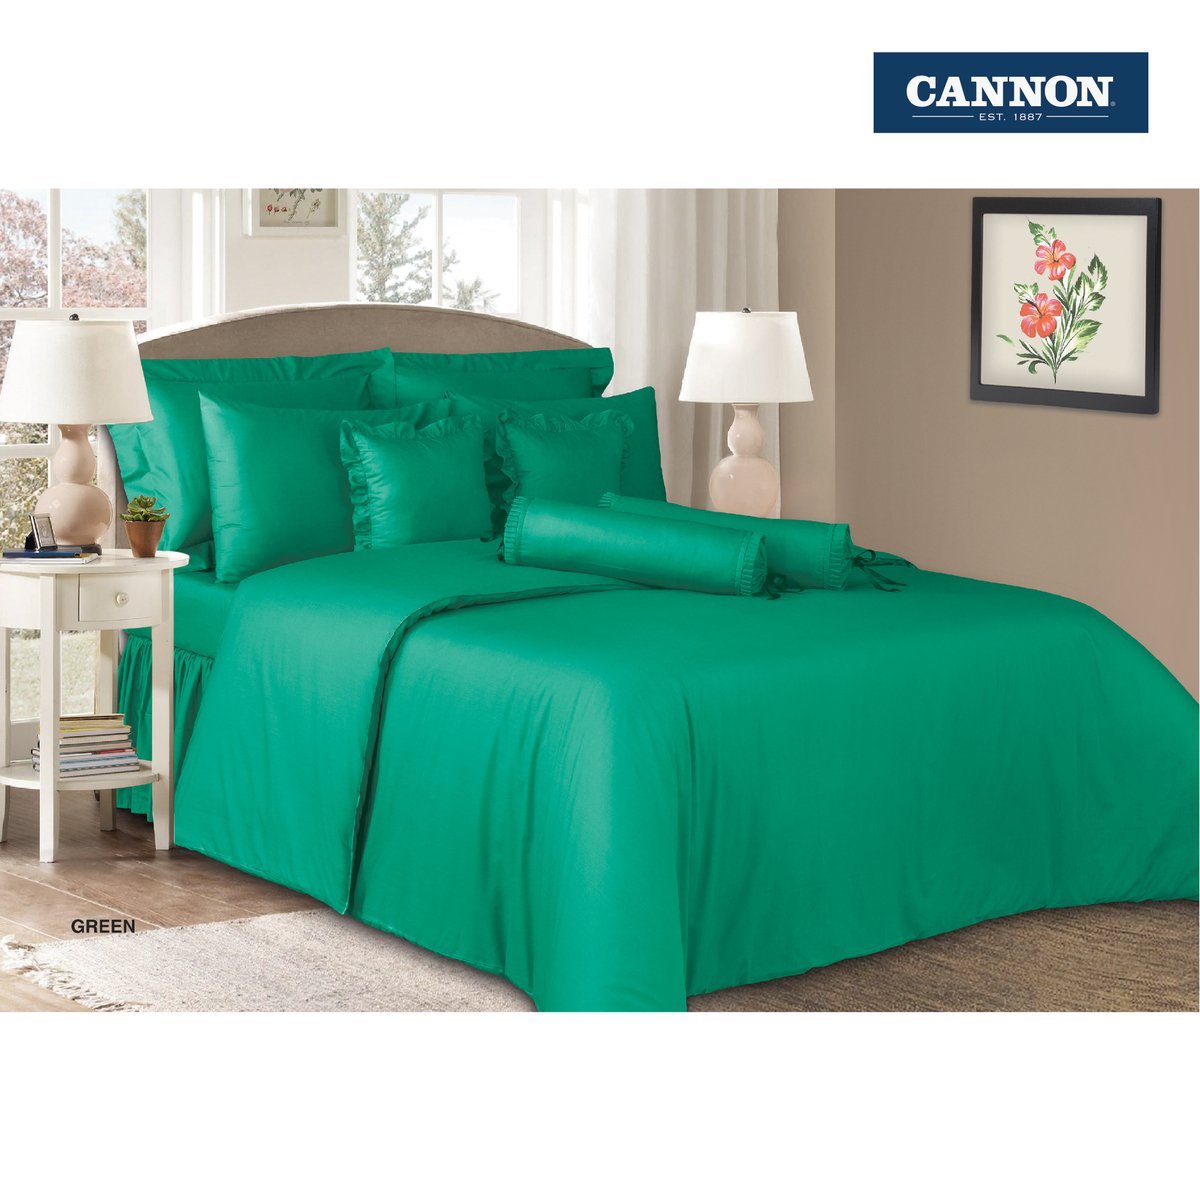 Cannon Bed Sheet + 2pcs Pillow Cover Plain King Size 274x259cm Green